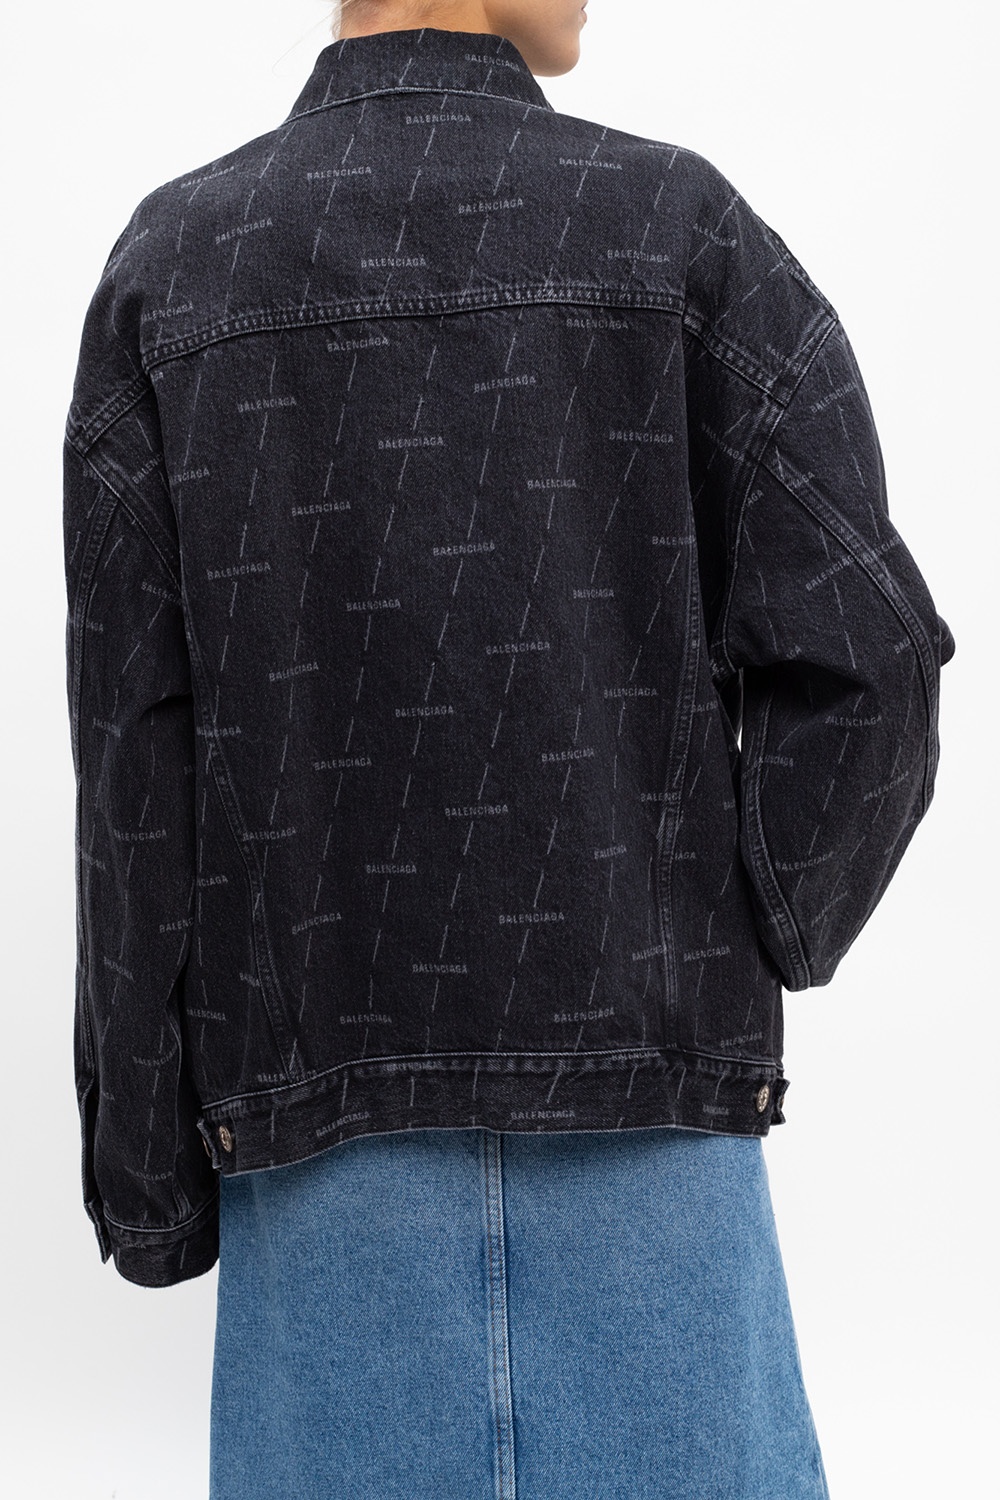 Balenciaga Denim jacket with bring